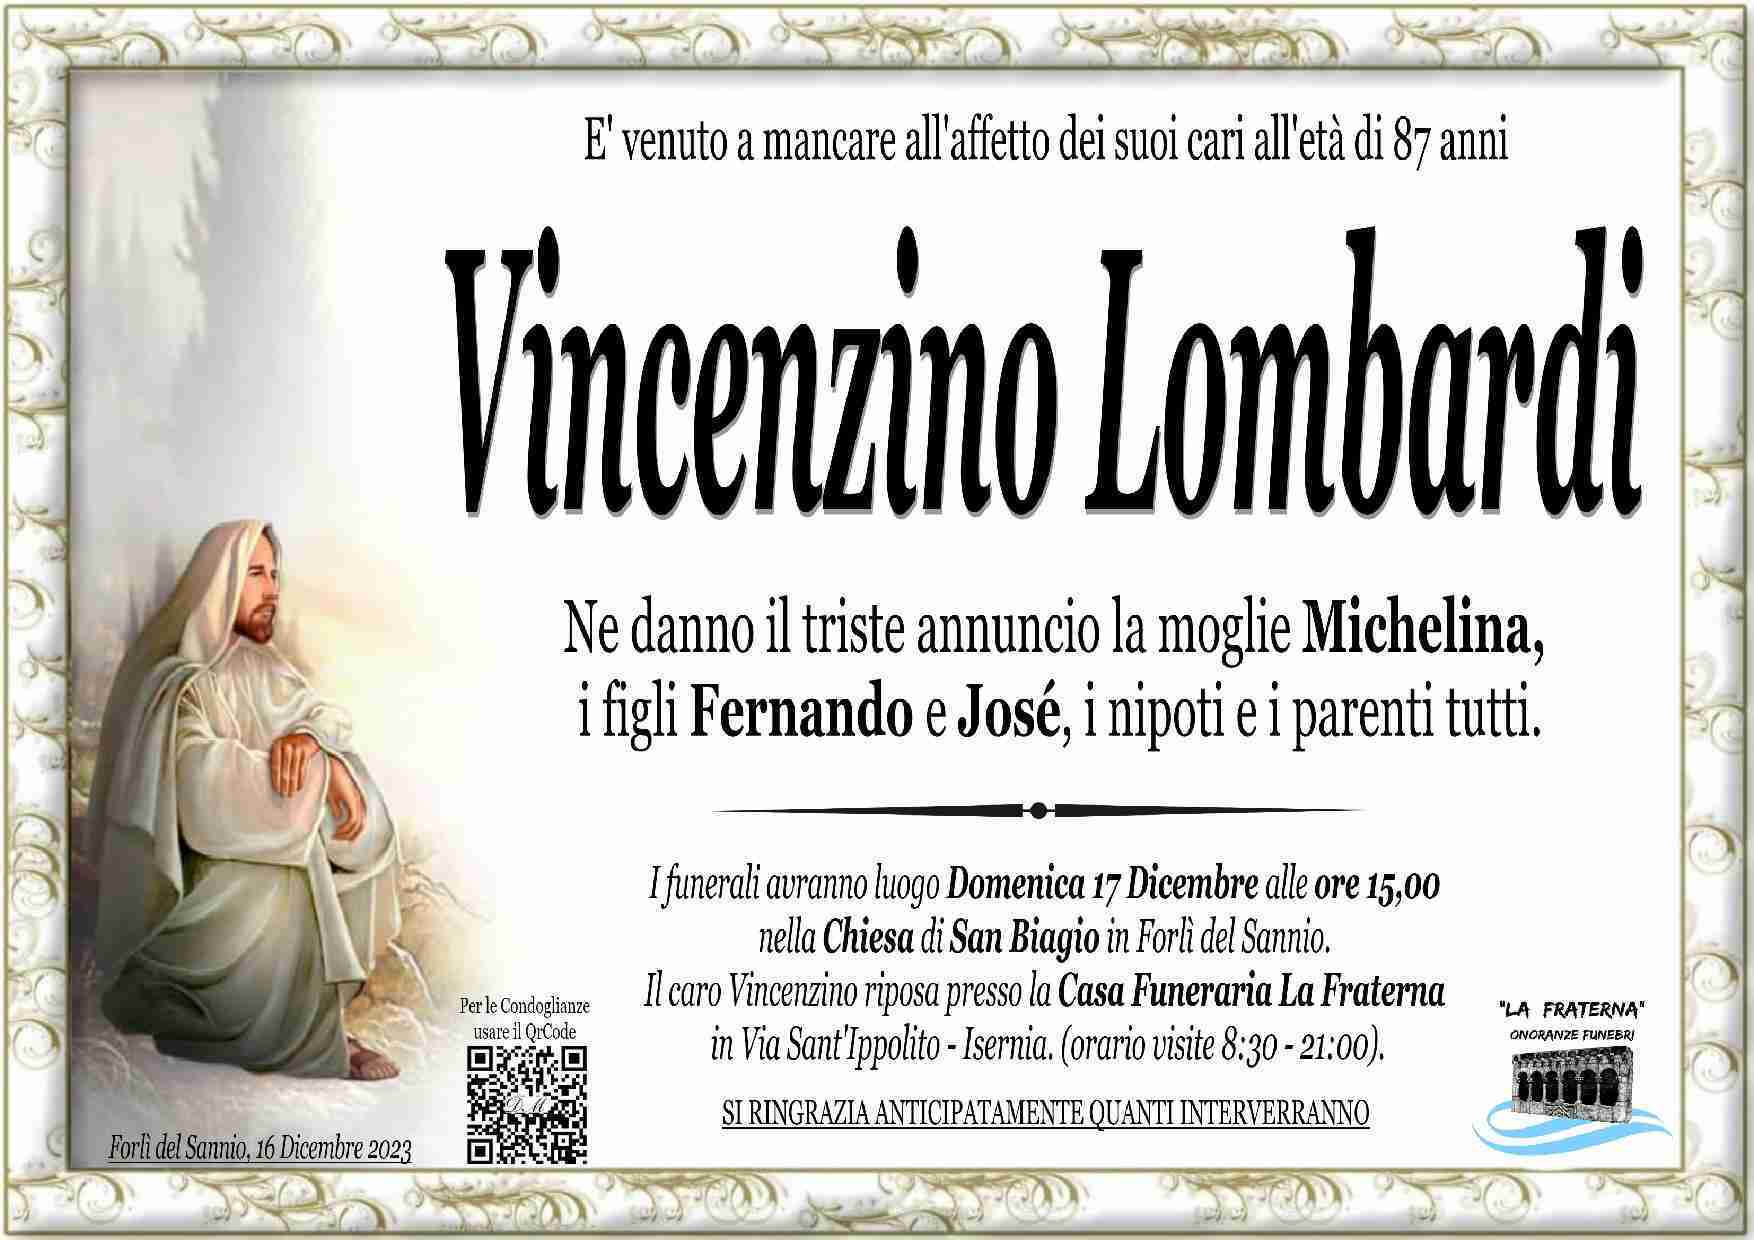 Vincenzino Lombardi